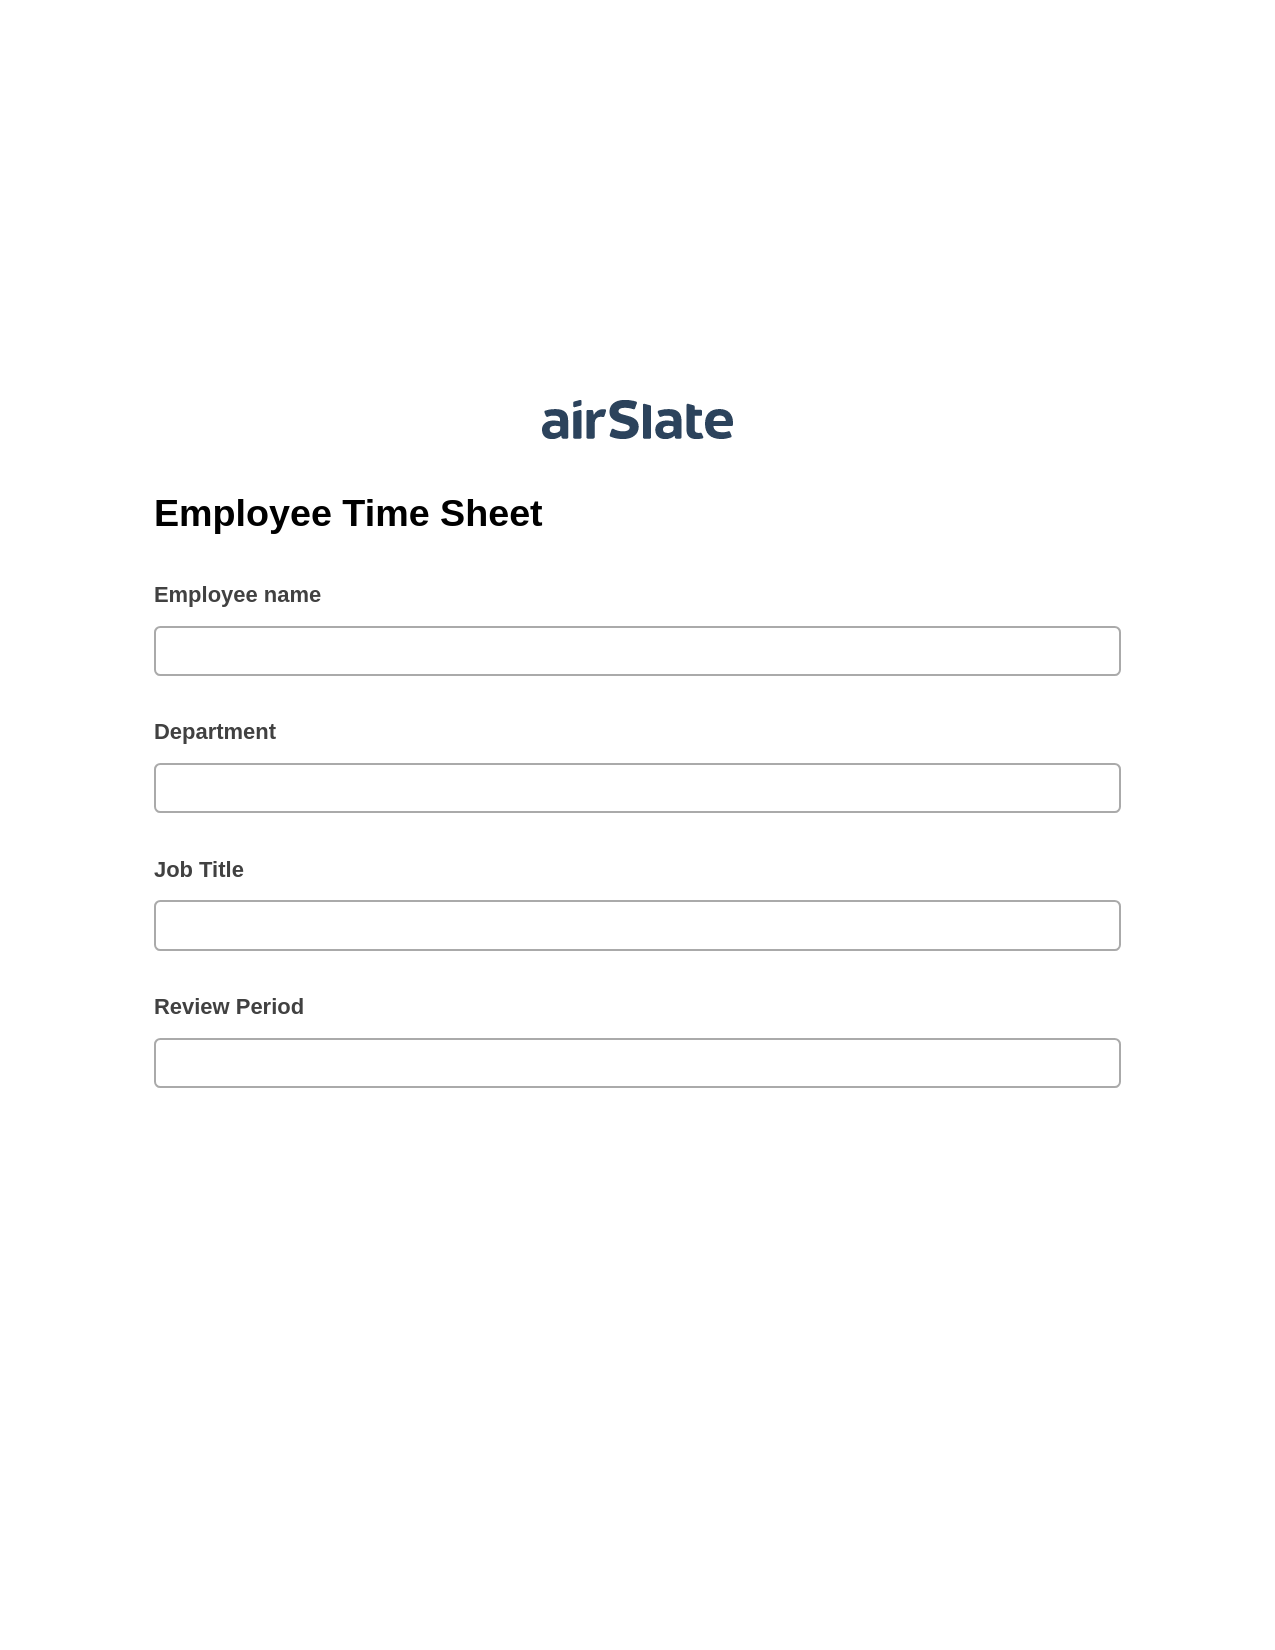 Multirole Employee Time Sheet Pre-fill from another Slate Bot, Jira Bot, Slack Two-Way Binding Bot